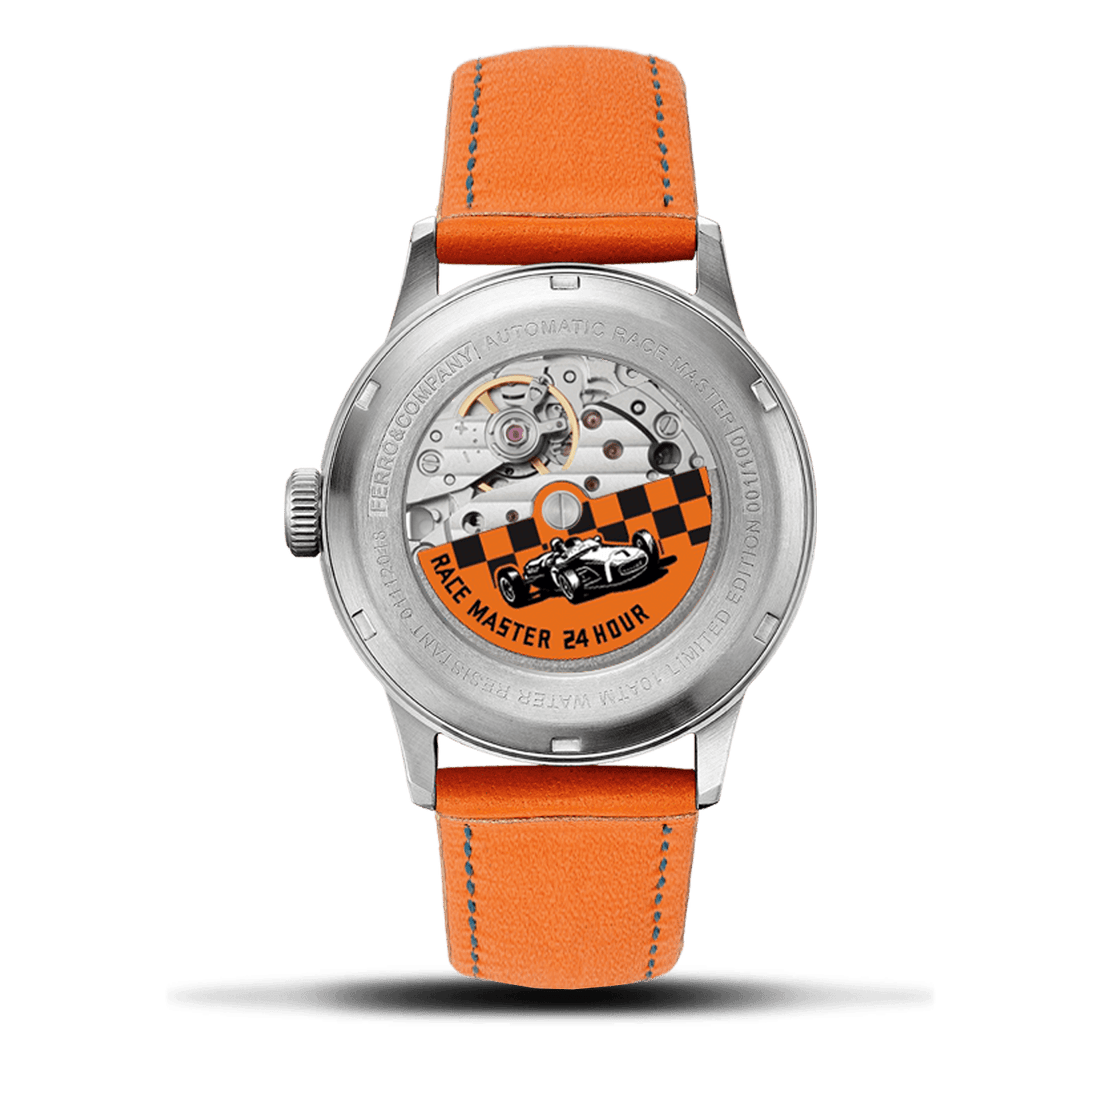 Race Master Automatic GLF - Ferro & Company Watches